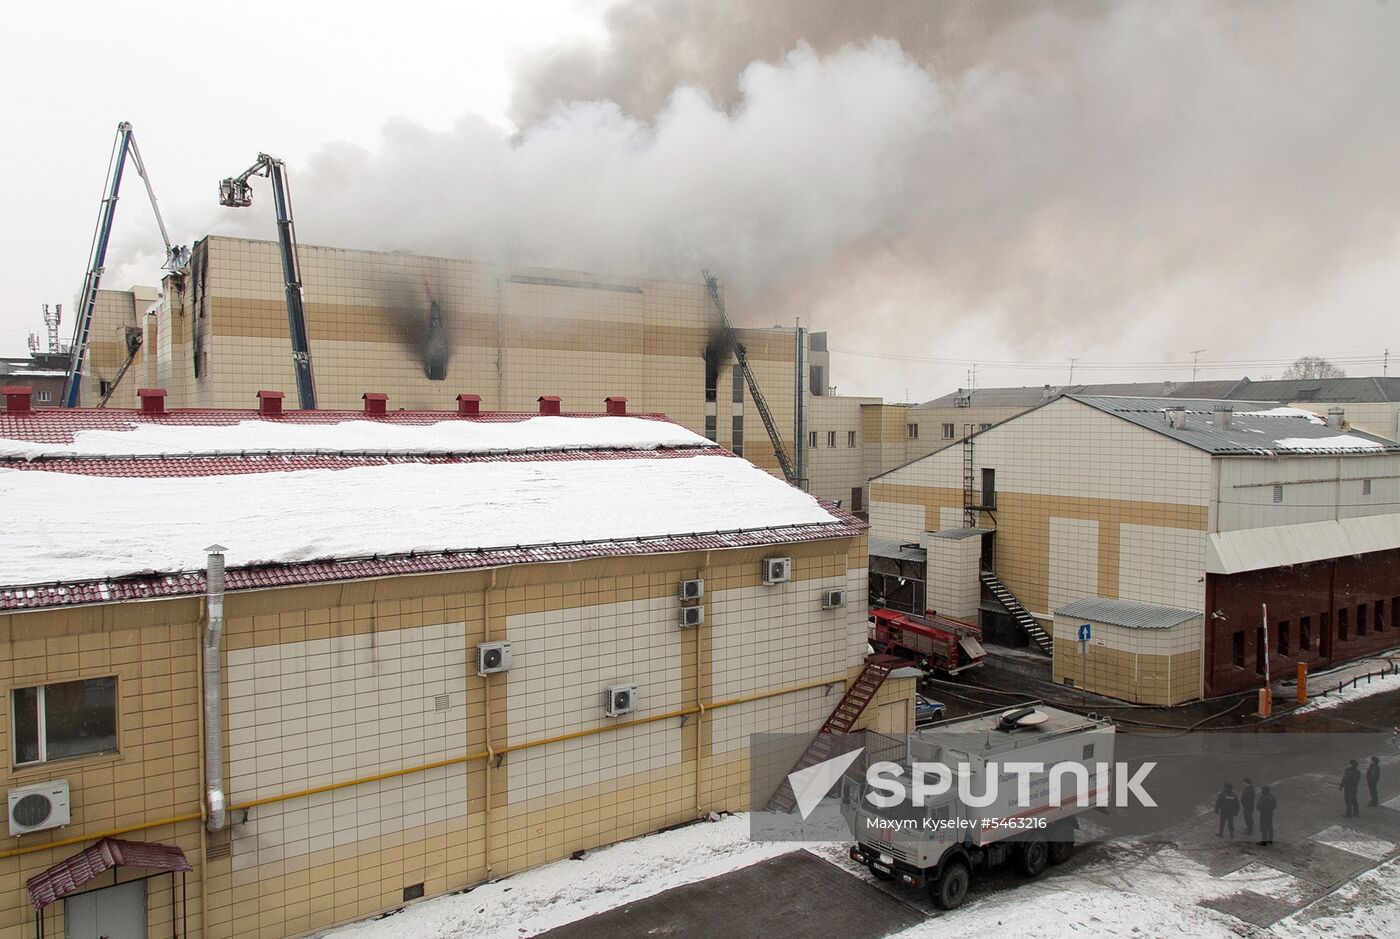 Fire at Zimnyaya Vishnya shopping mall in Kemerovo